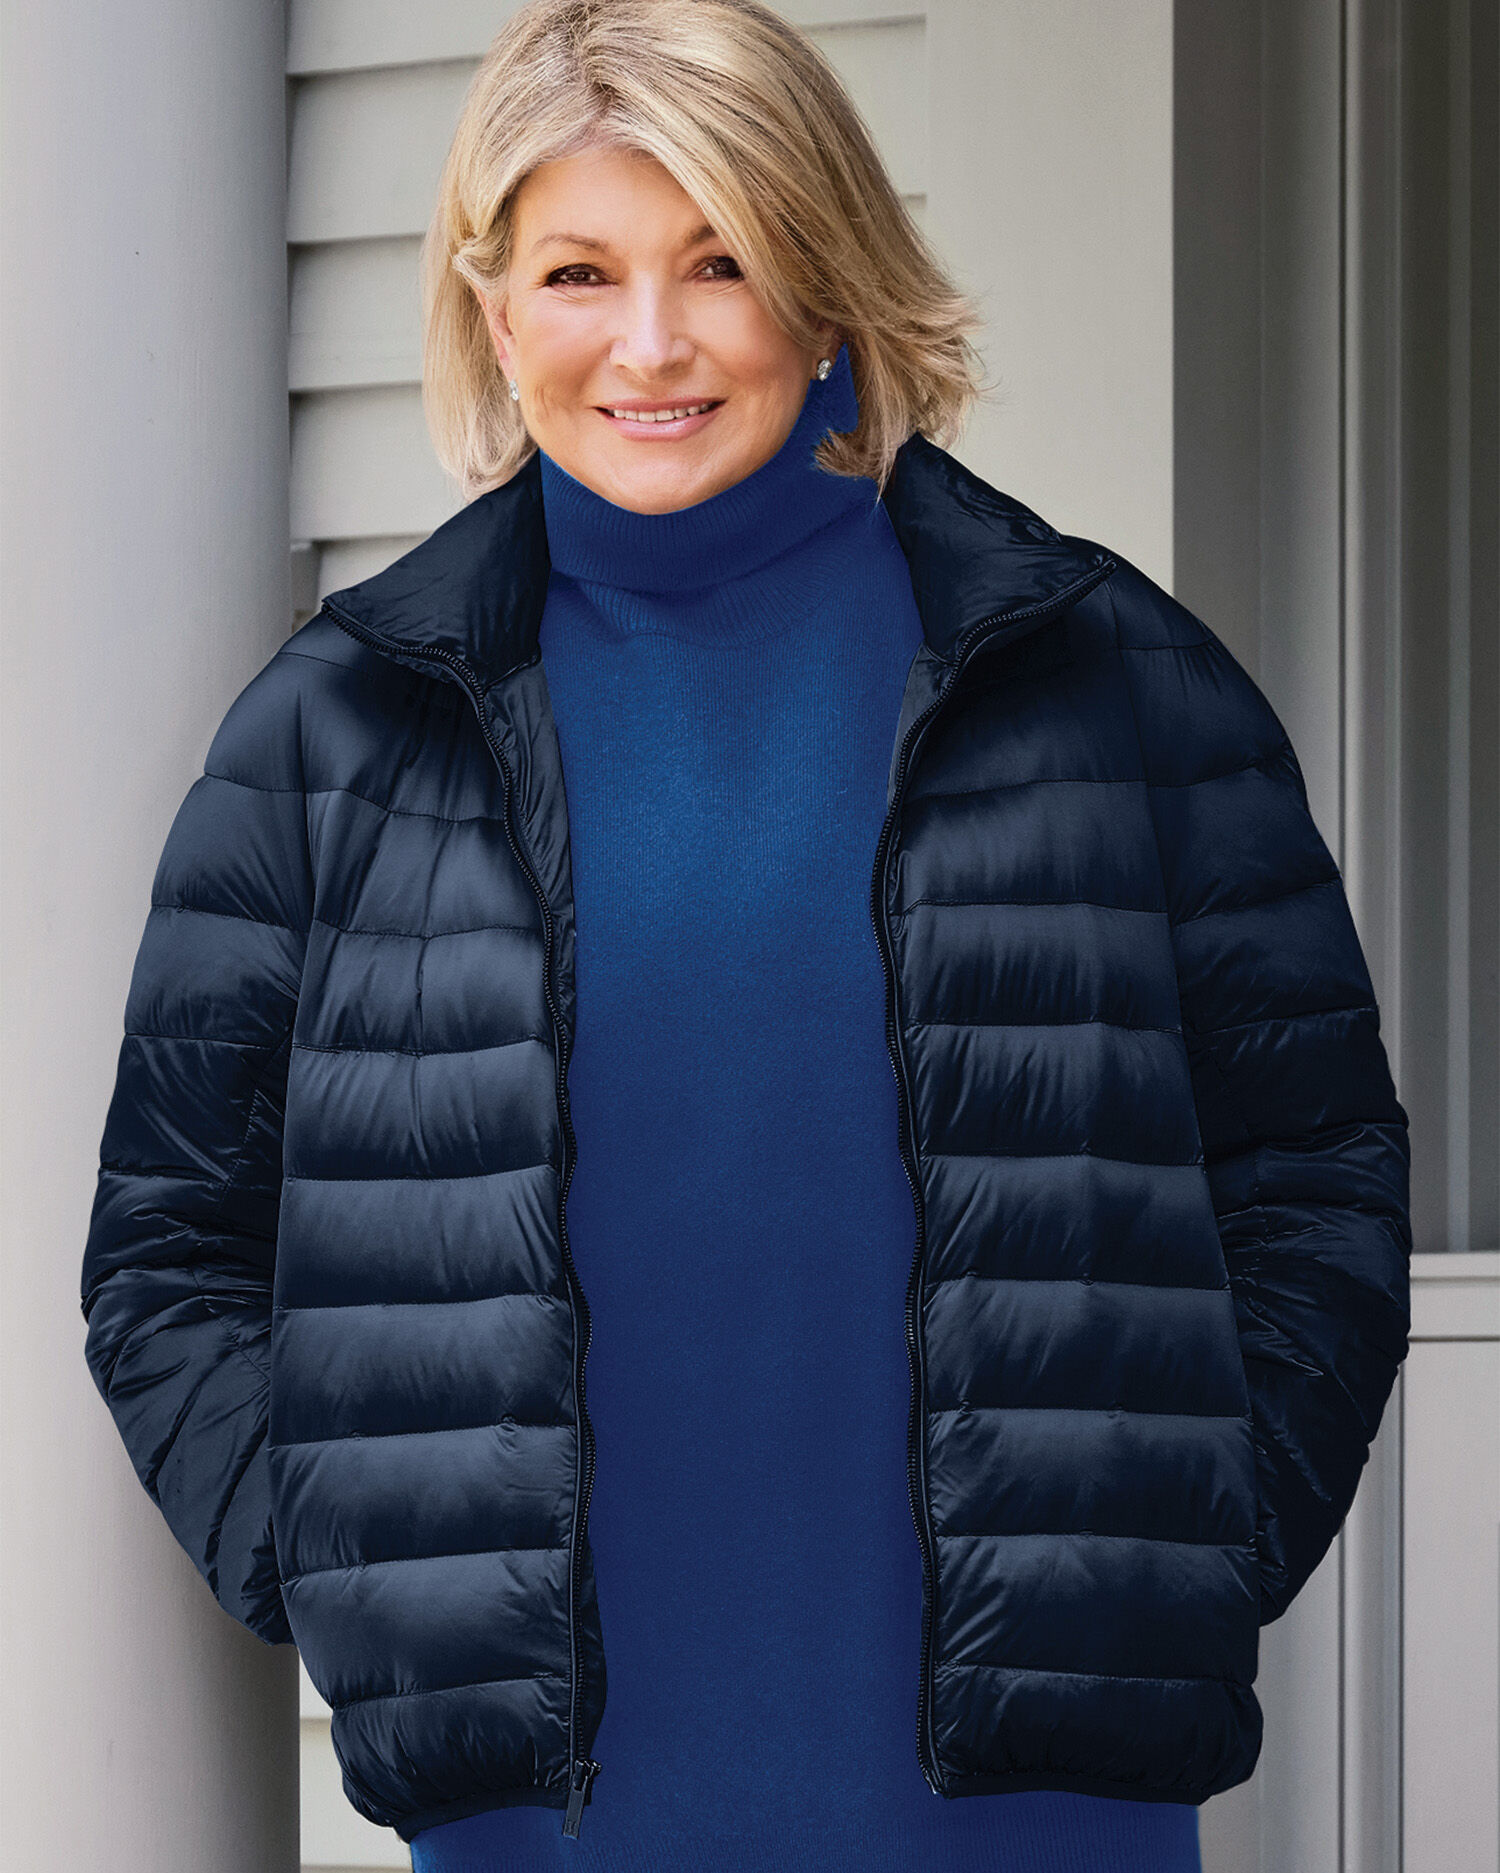 Martha Stewart's Everyday Packable Jacket